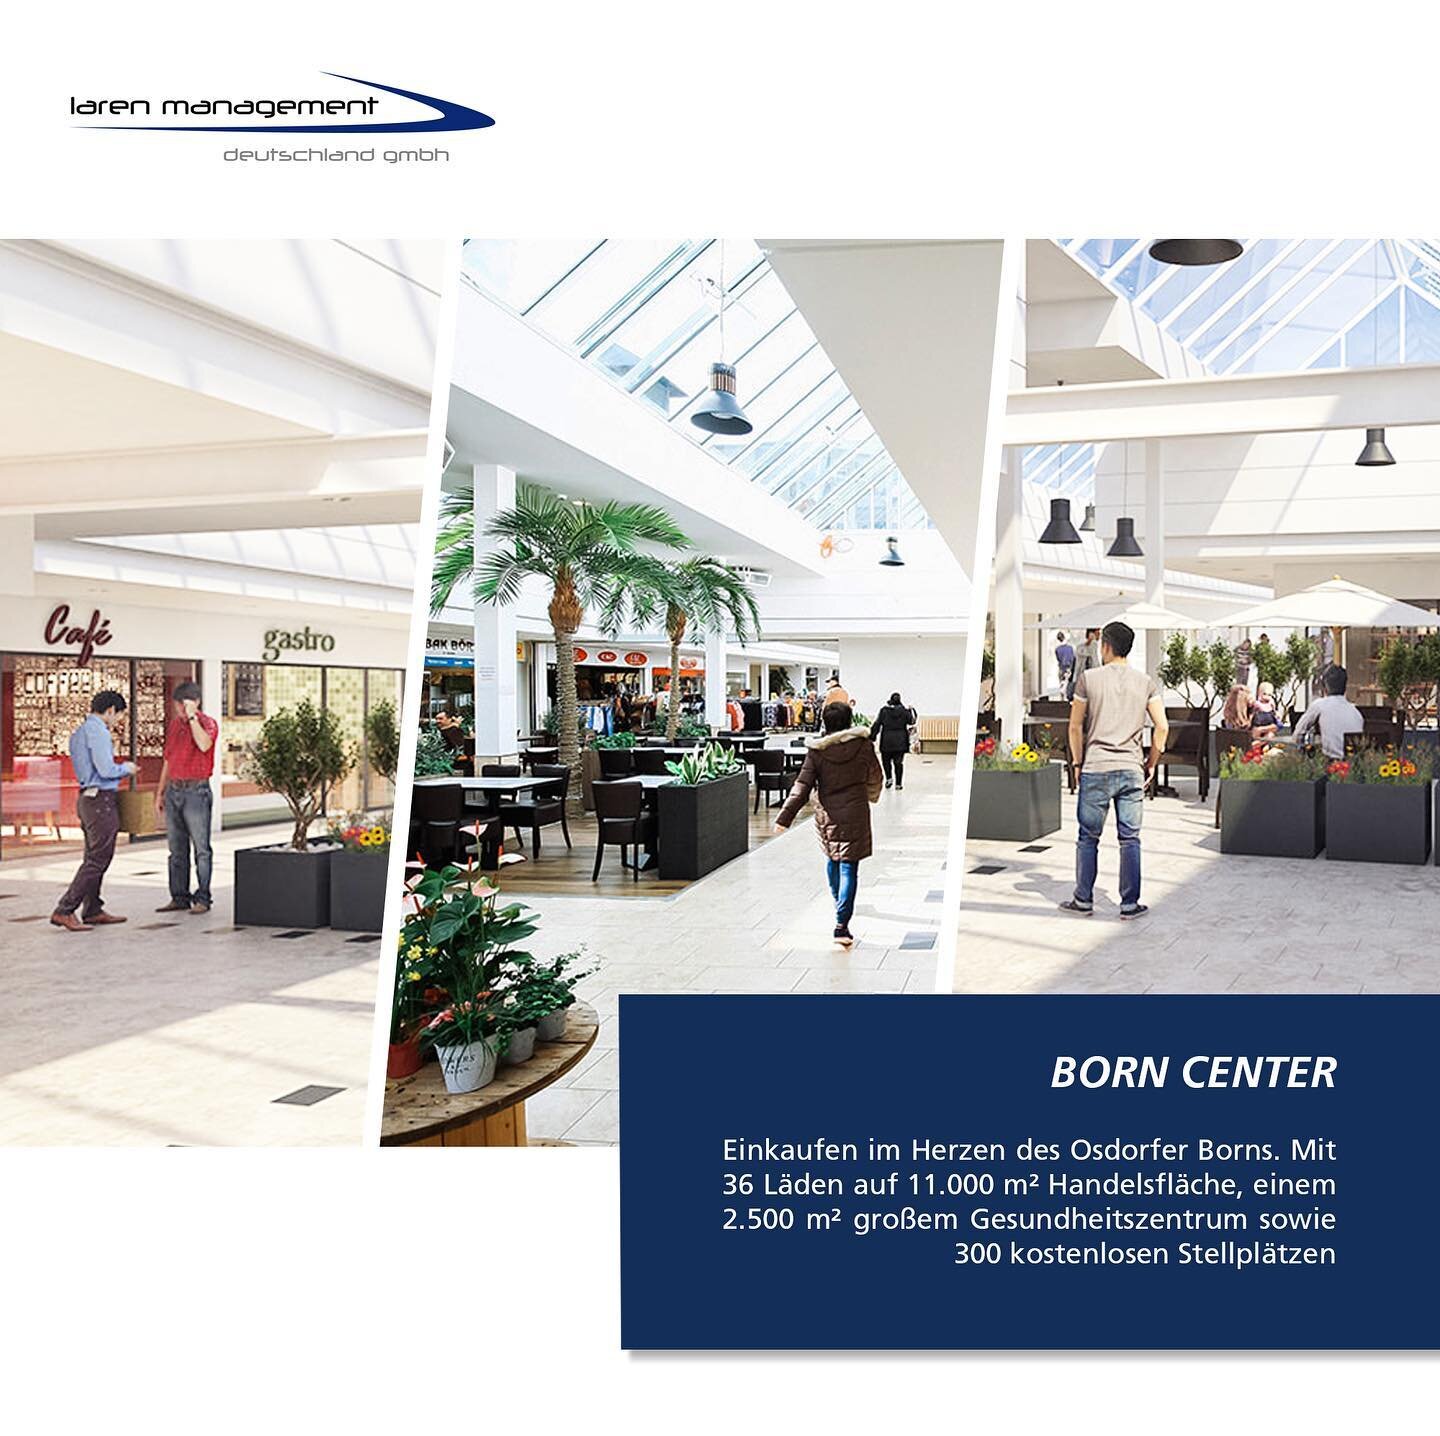 Das Born Center im &Uuml;berblick 🛒🛍

#larenmanagement #larenhamburg #shoppingcenter #larenestate